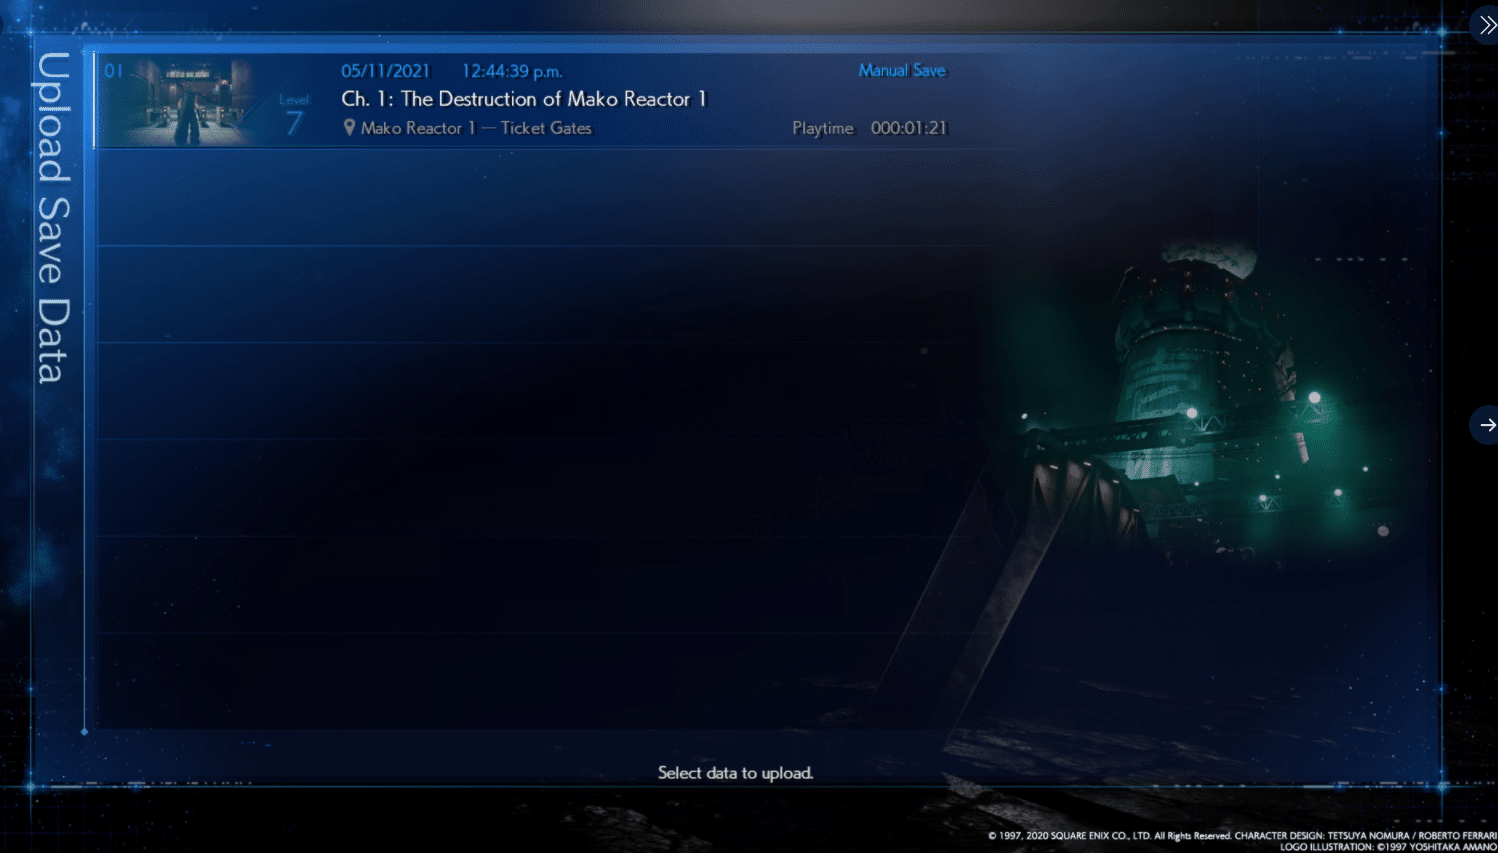 Final Fantasy VII Remake version 1.02 update now live